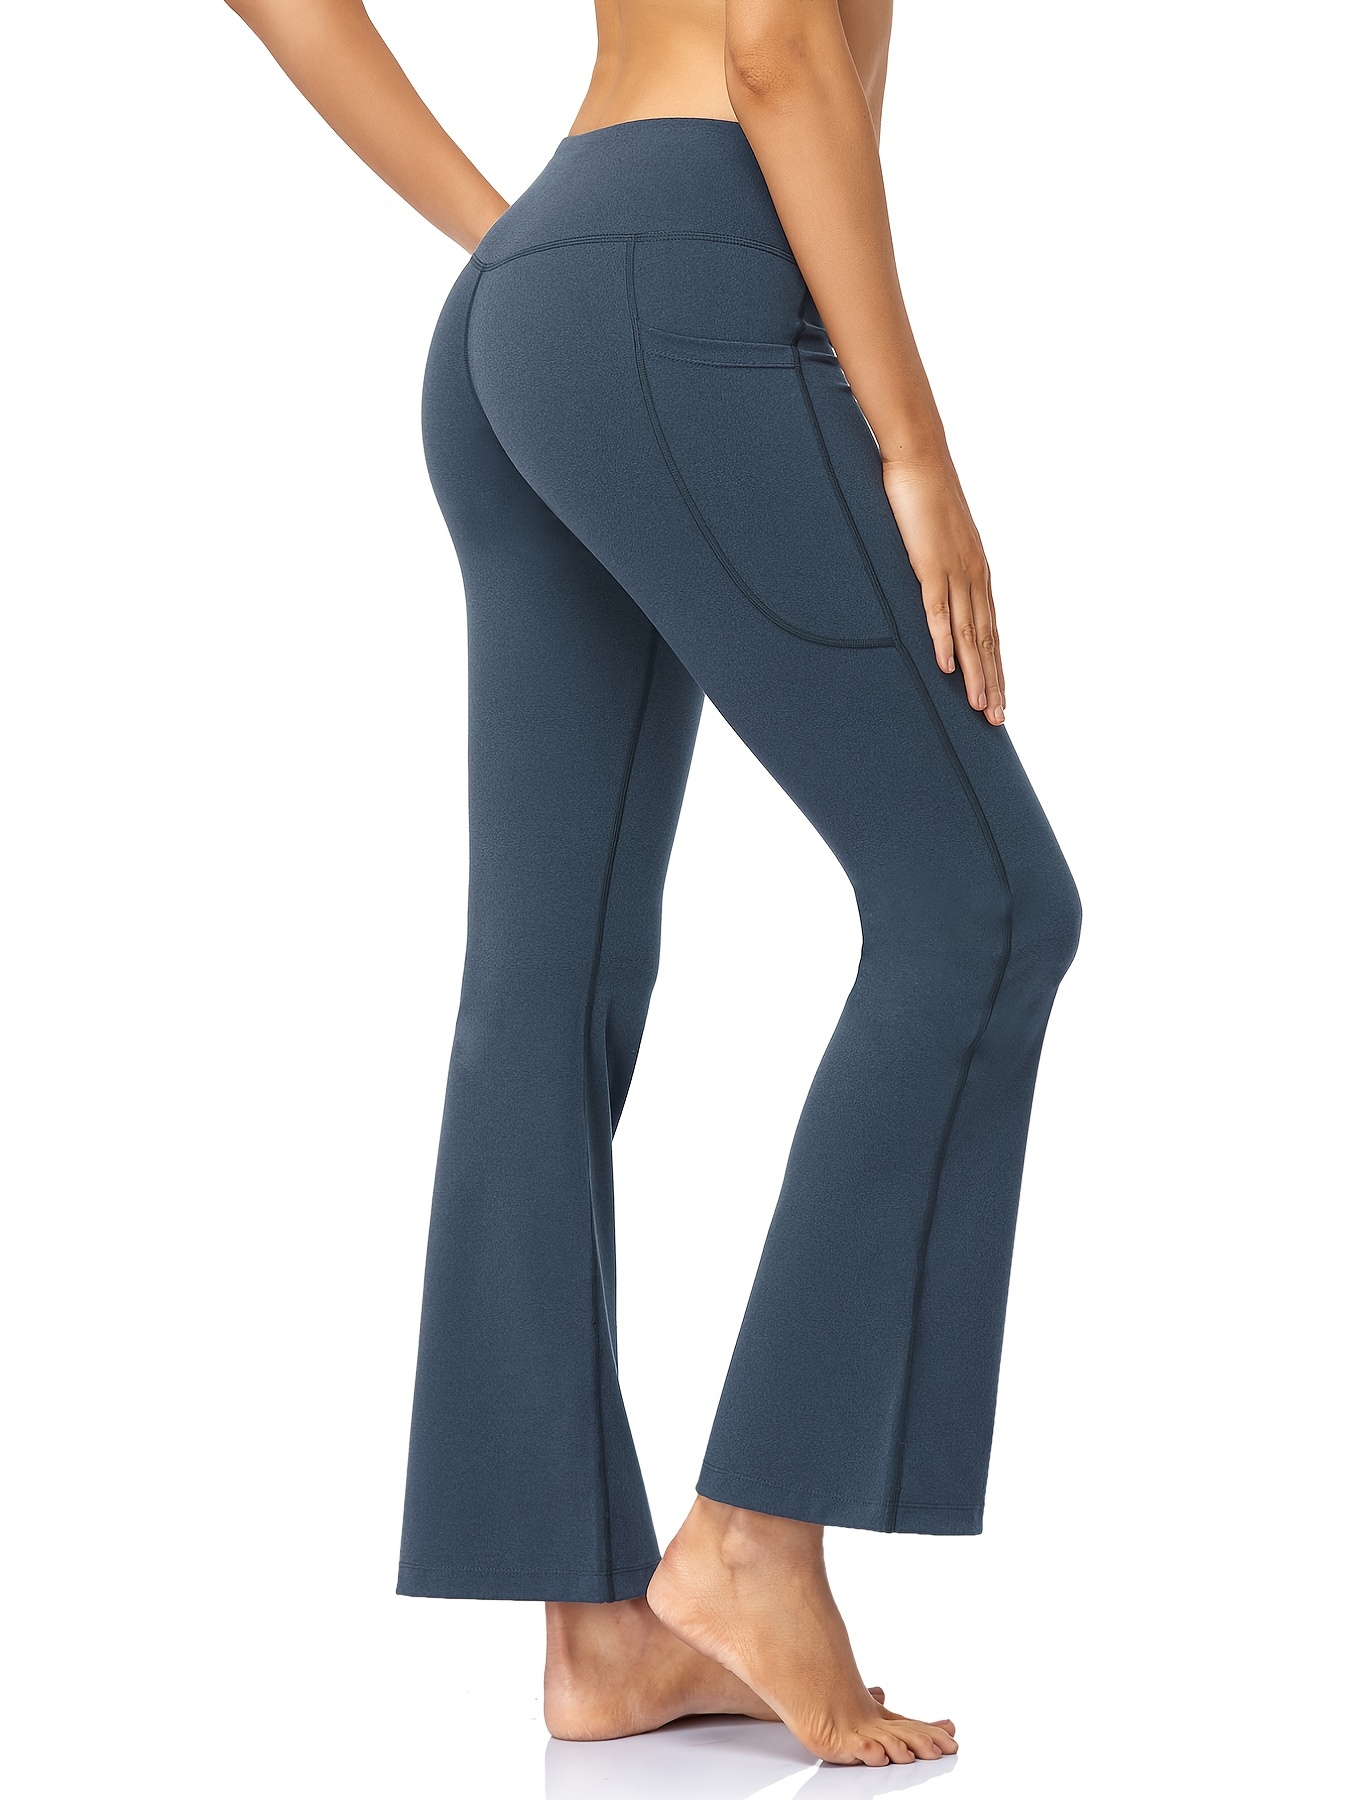 Bamans Yoga Dress Pants for Women Bootcut, Slant Pockets, Wide Flare,  Workout Long Bootleg Dress Yoga Pants